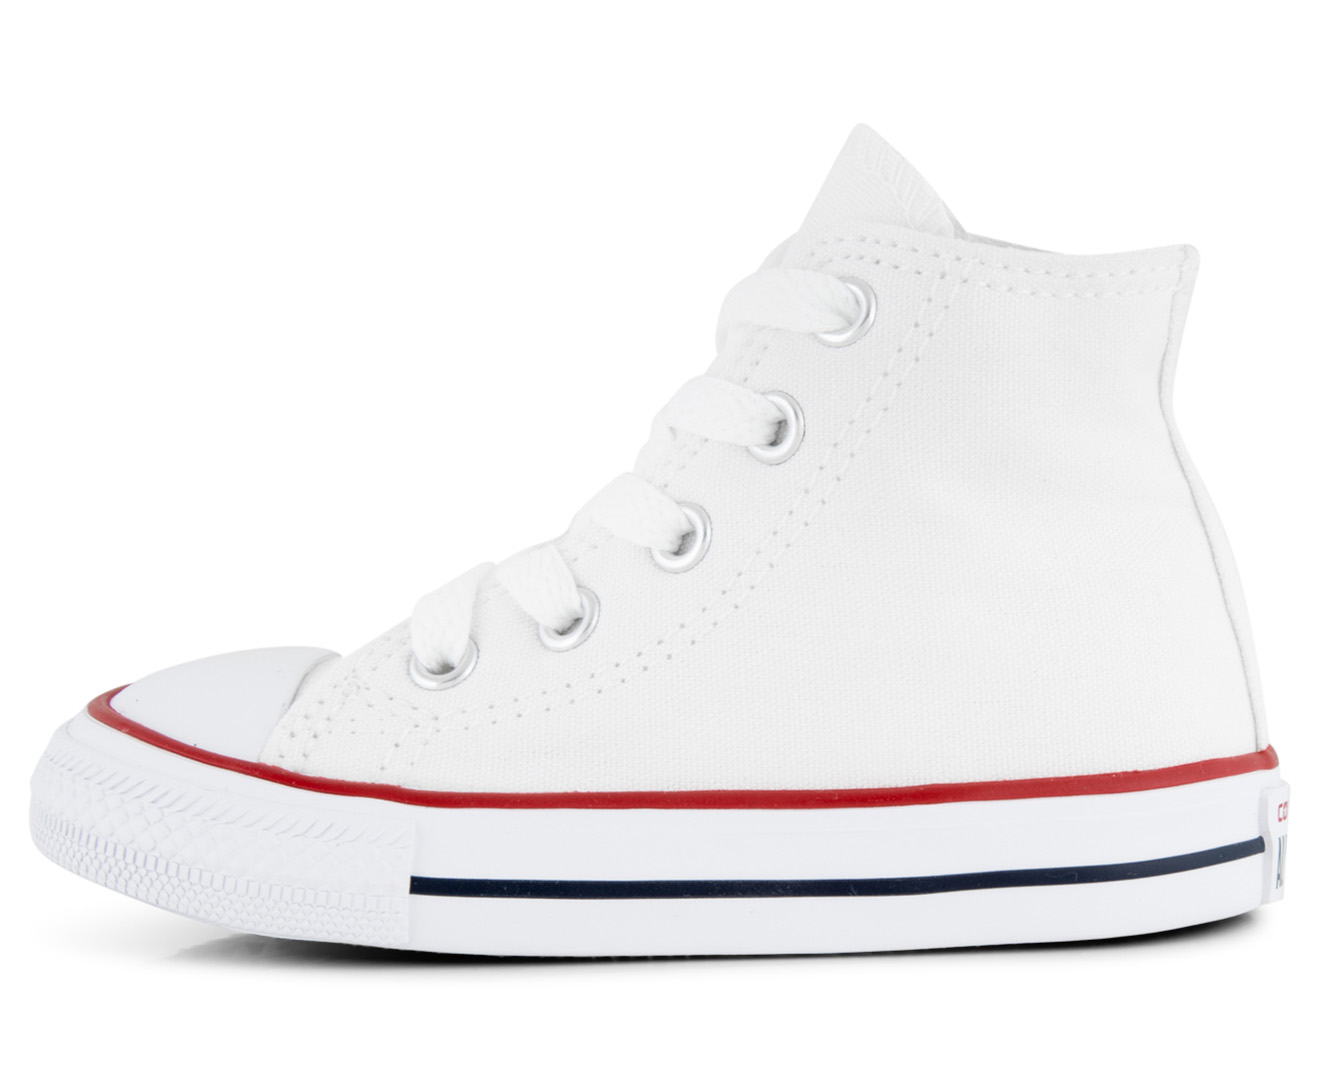 Converse Toddler Chuck Taylor All Star High Top Sneaker - Optical White ...